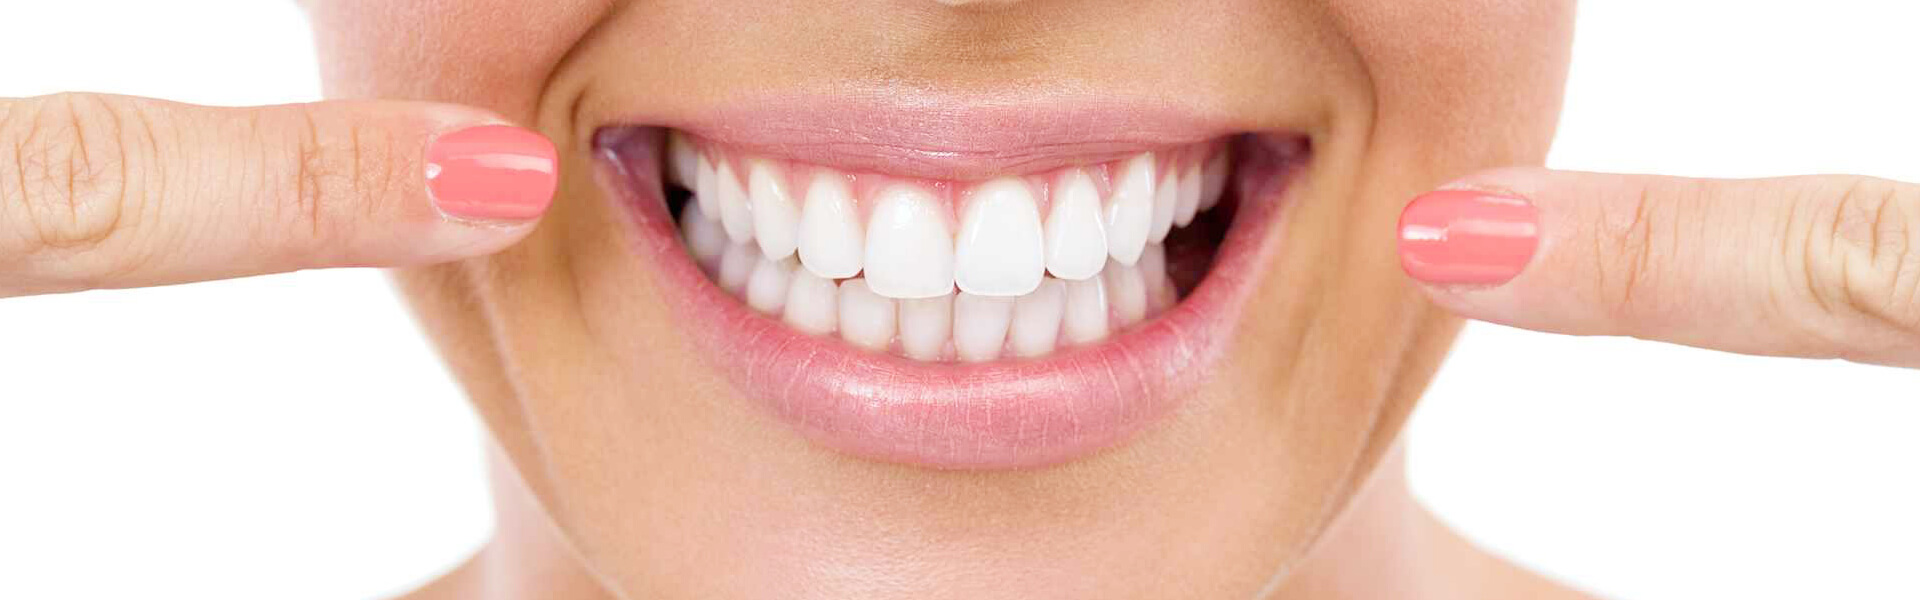 Seven common dental myths